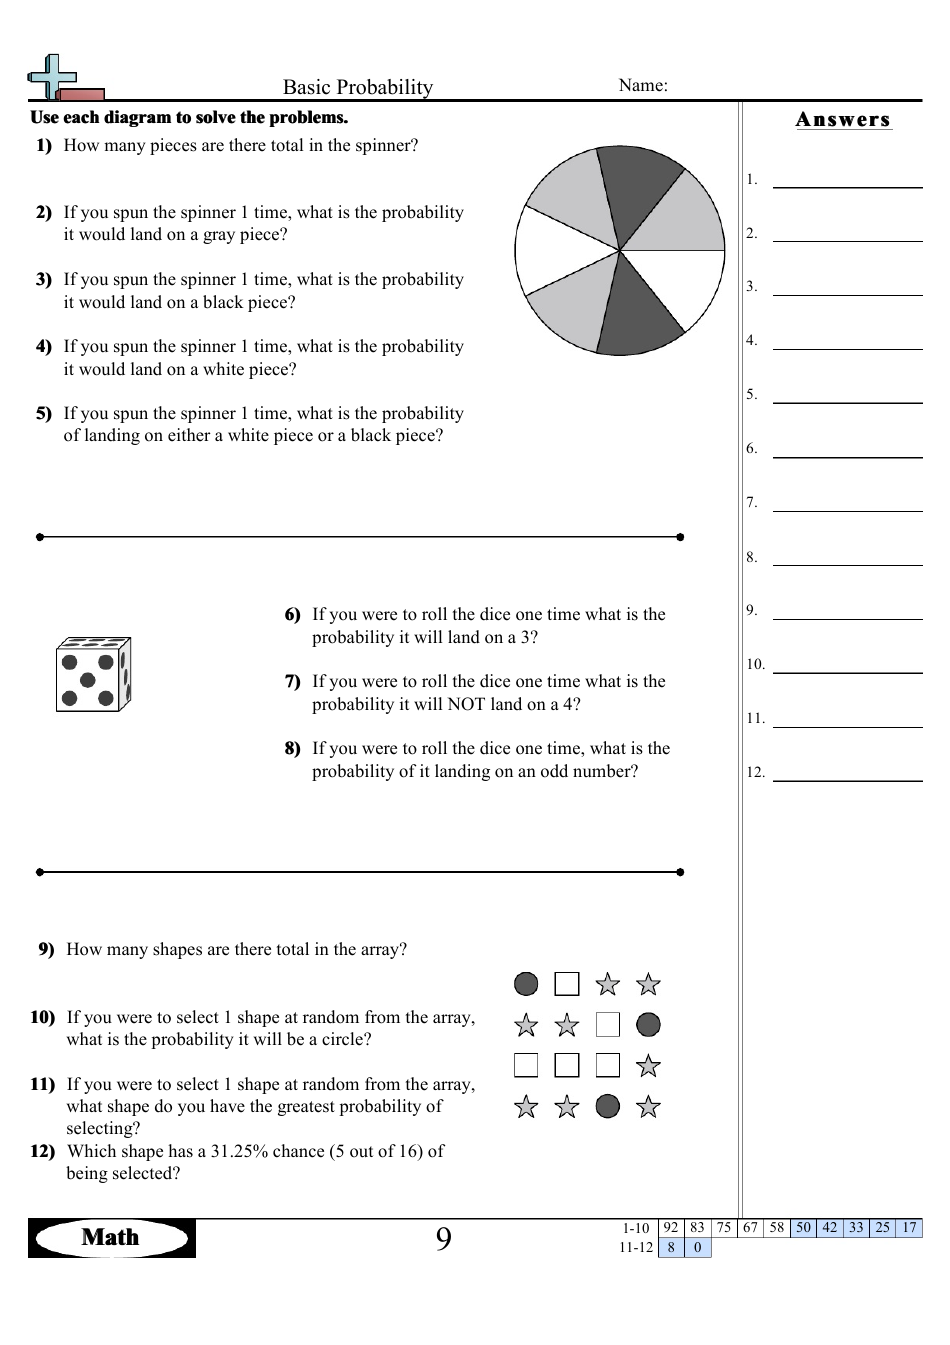 basic-probability-worksheet-with-answer-key-download-printable-pdf